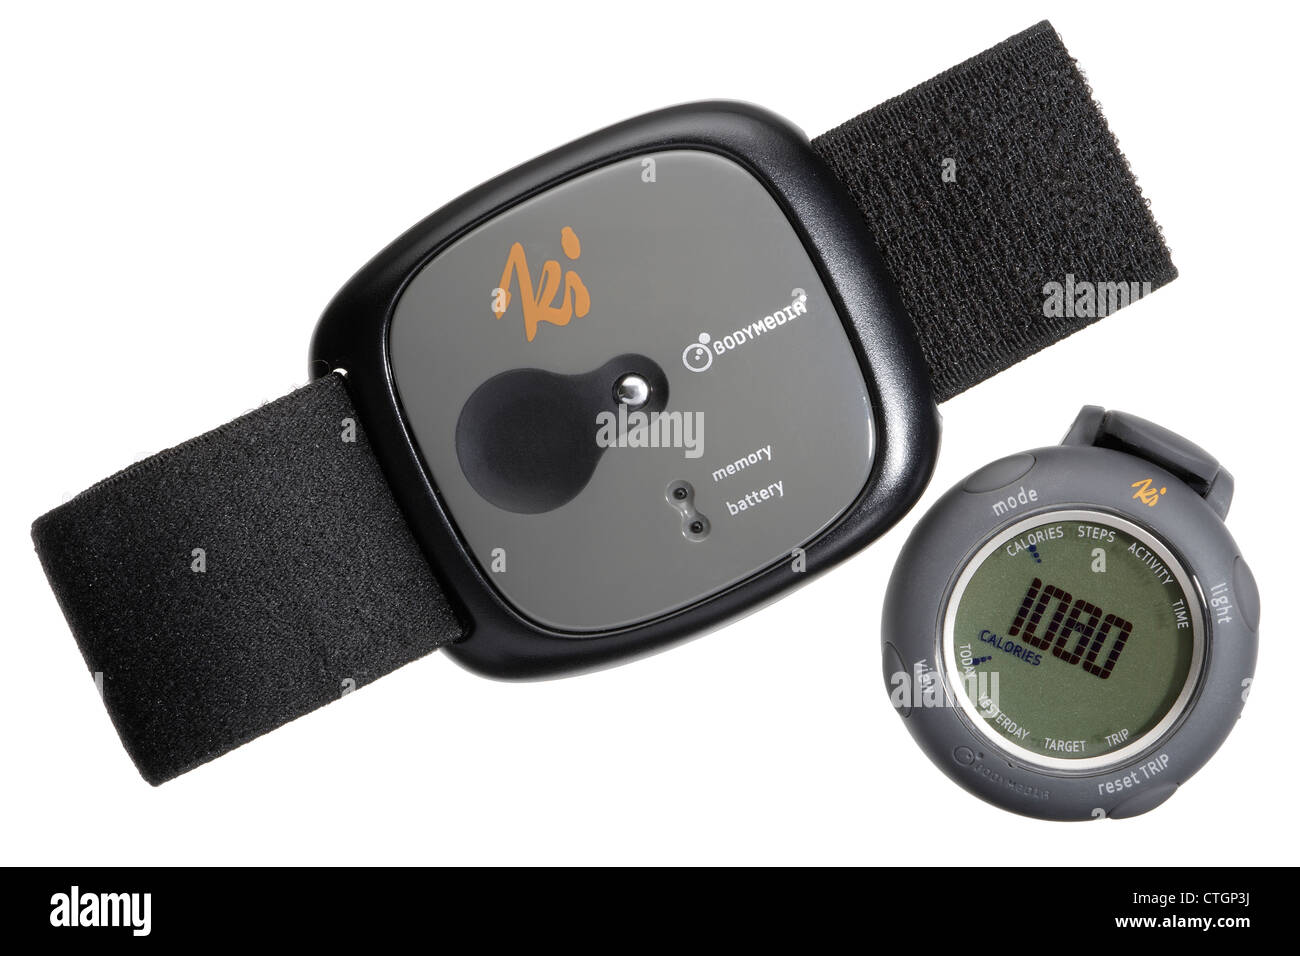 Ki fit armband monitor and calorie counter display Stock Photo